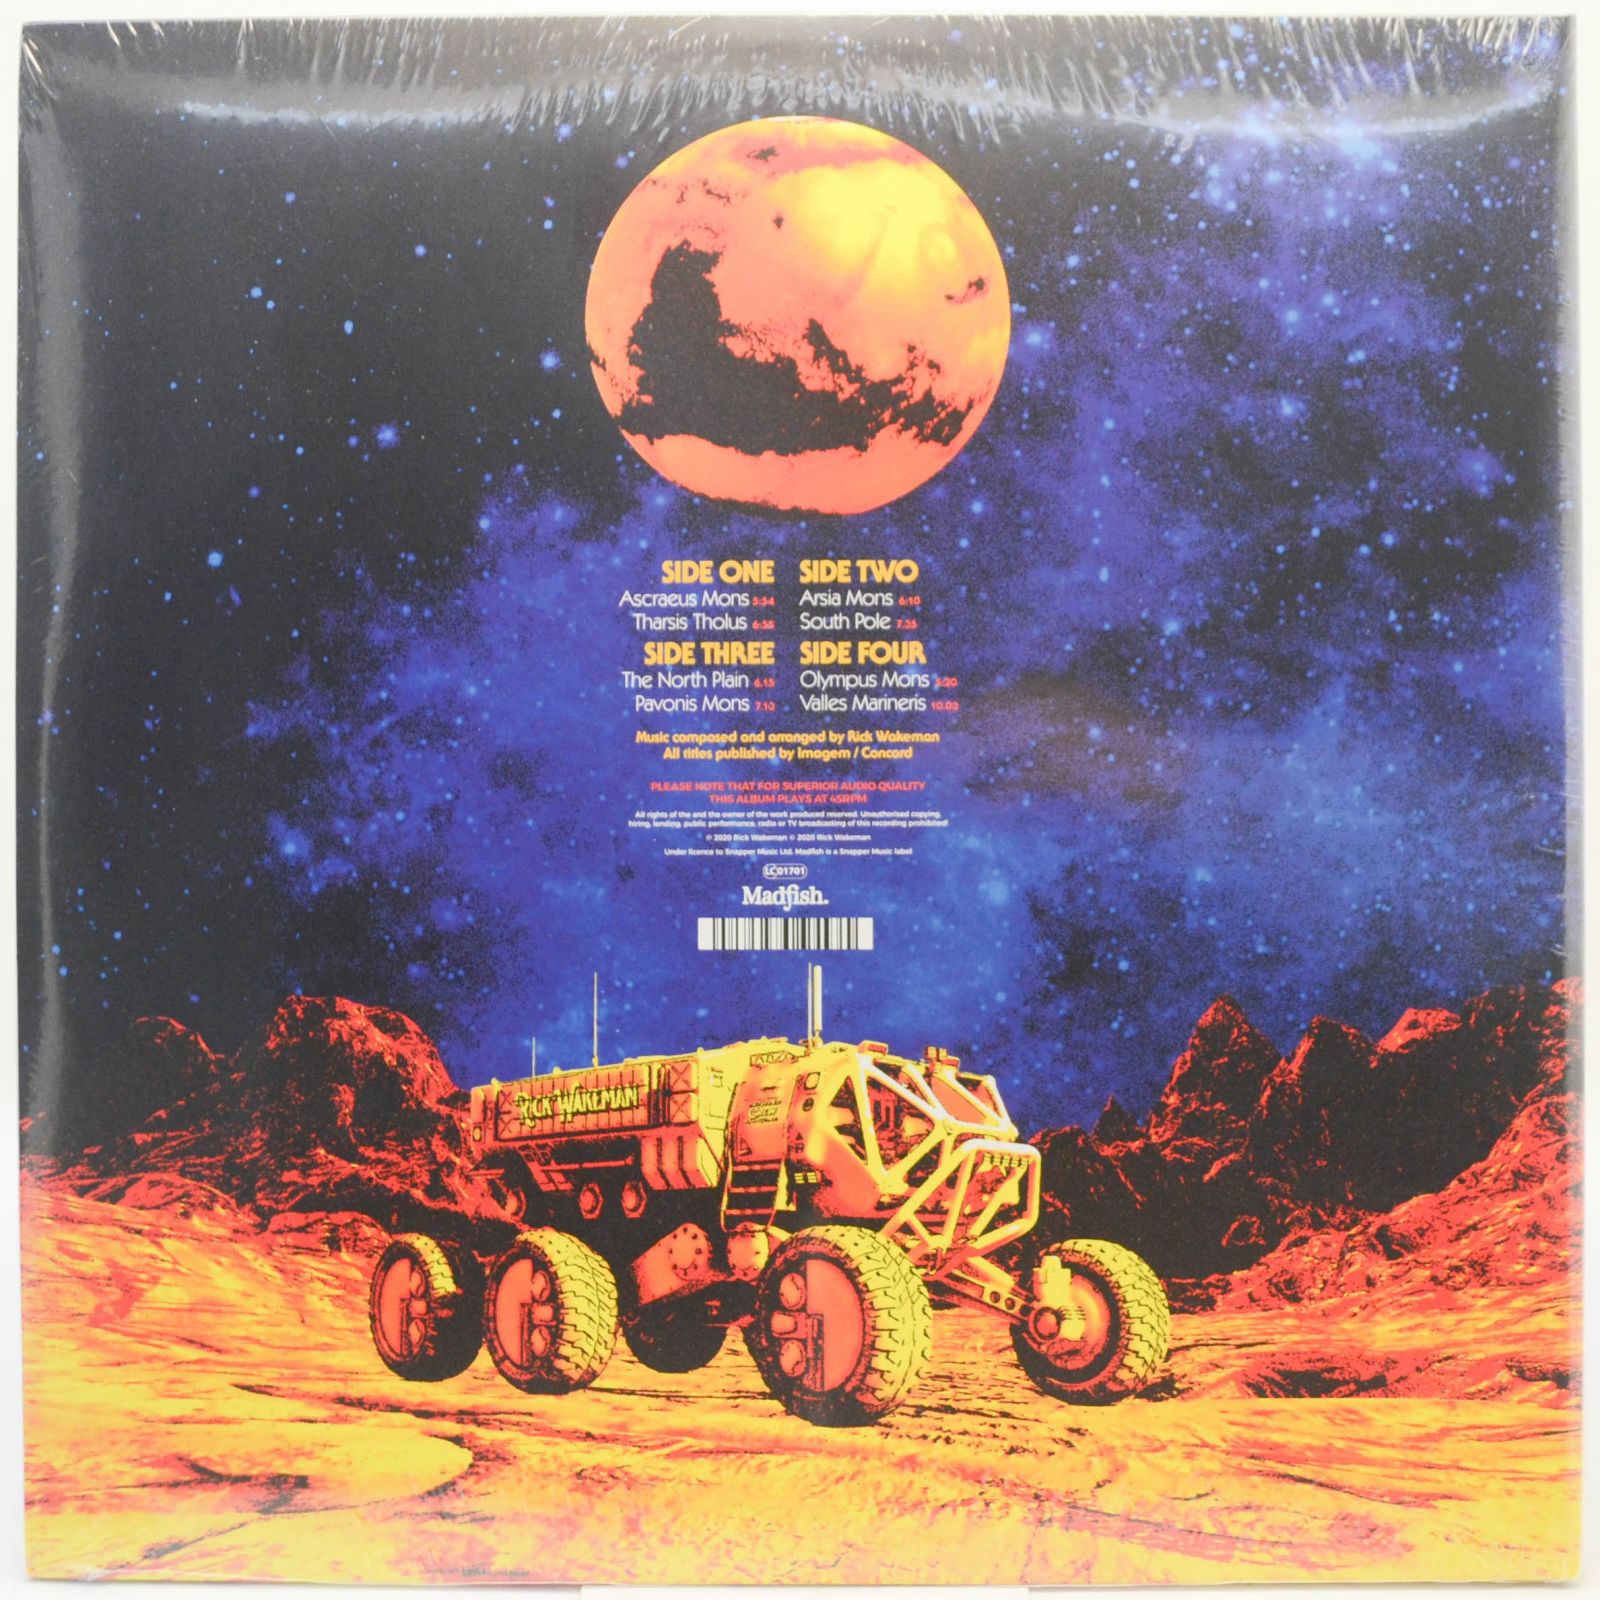 Rick Wakeman & The Martian Rock Ensemble — The Red Planet (2LP), 2020